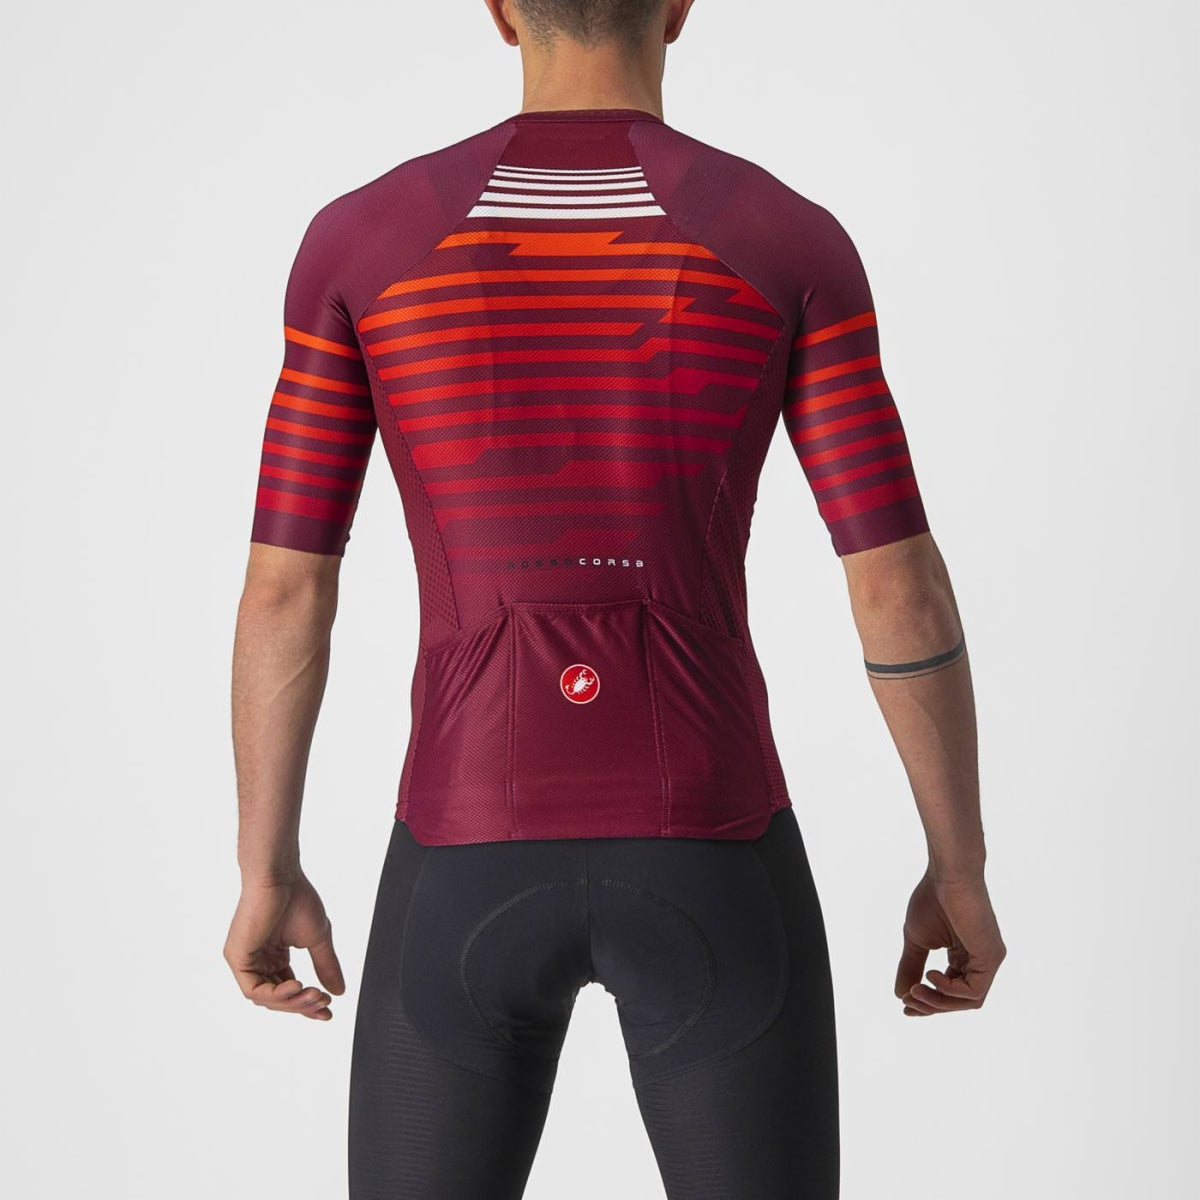 Castelli Climber's 3.0 Full-Zip Short Sleeve Cycling Jersey